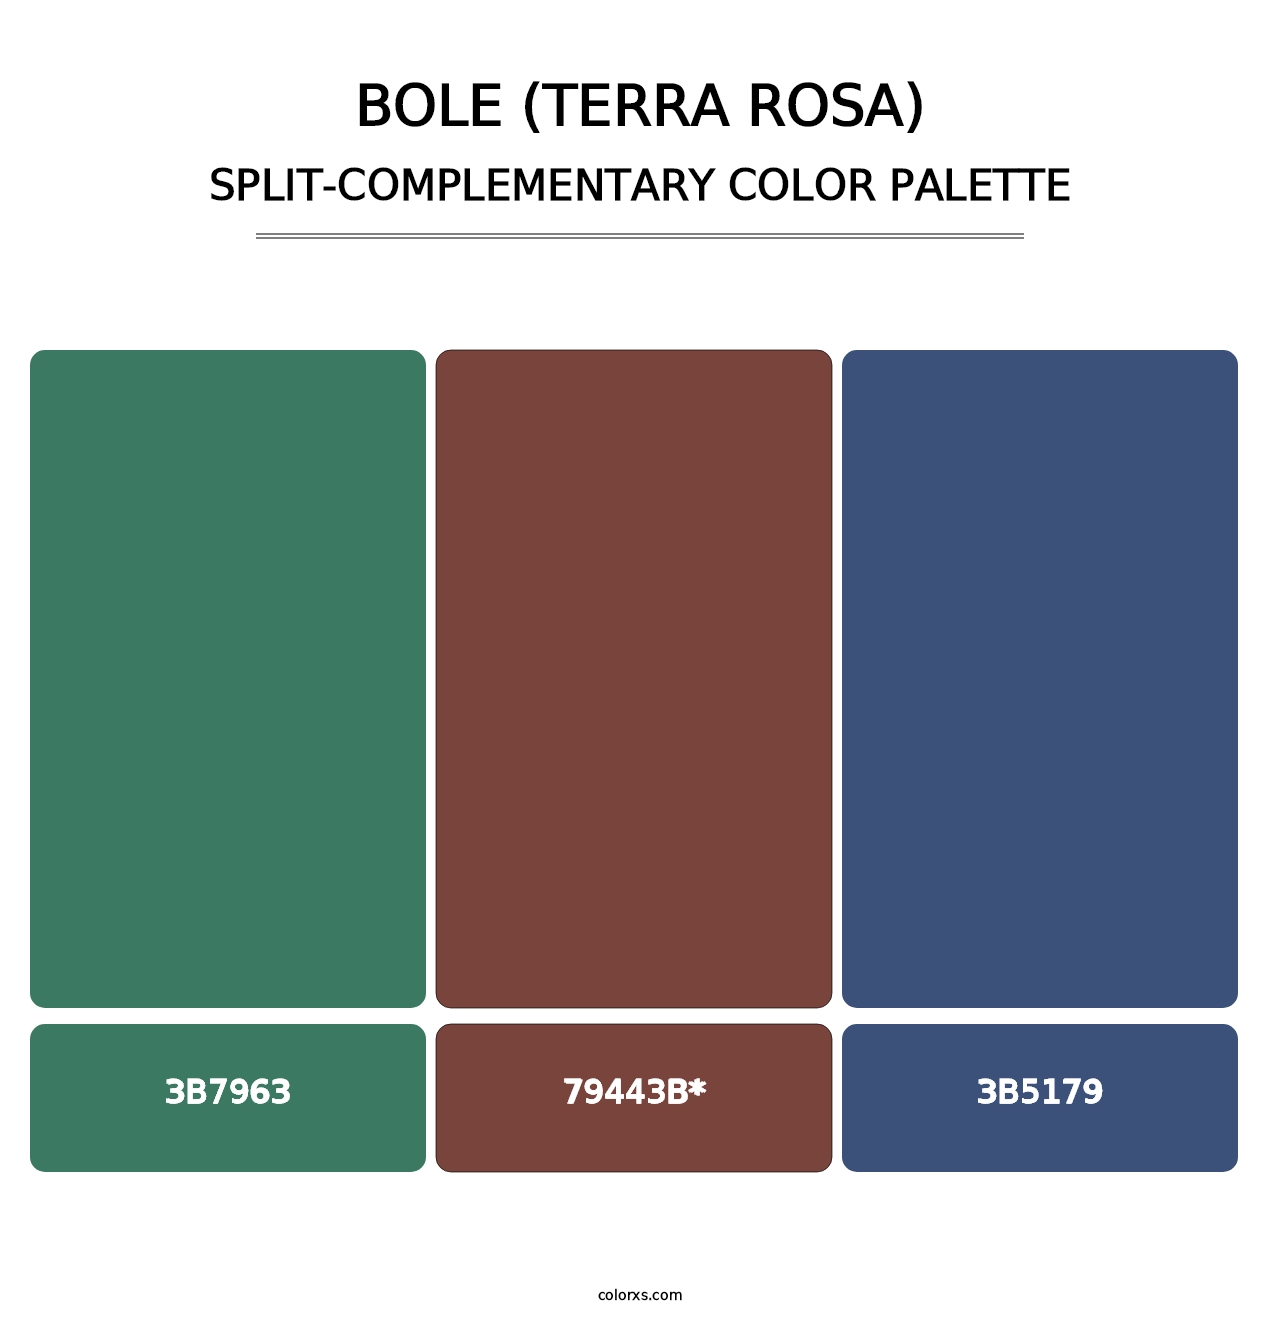 Bole (Terra Rosa) - Split-Complementary Color Palette